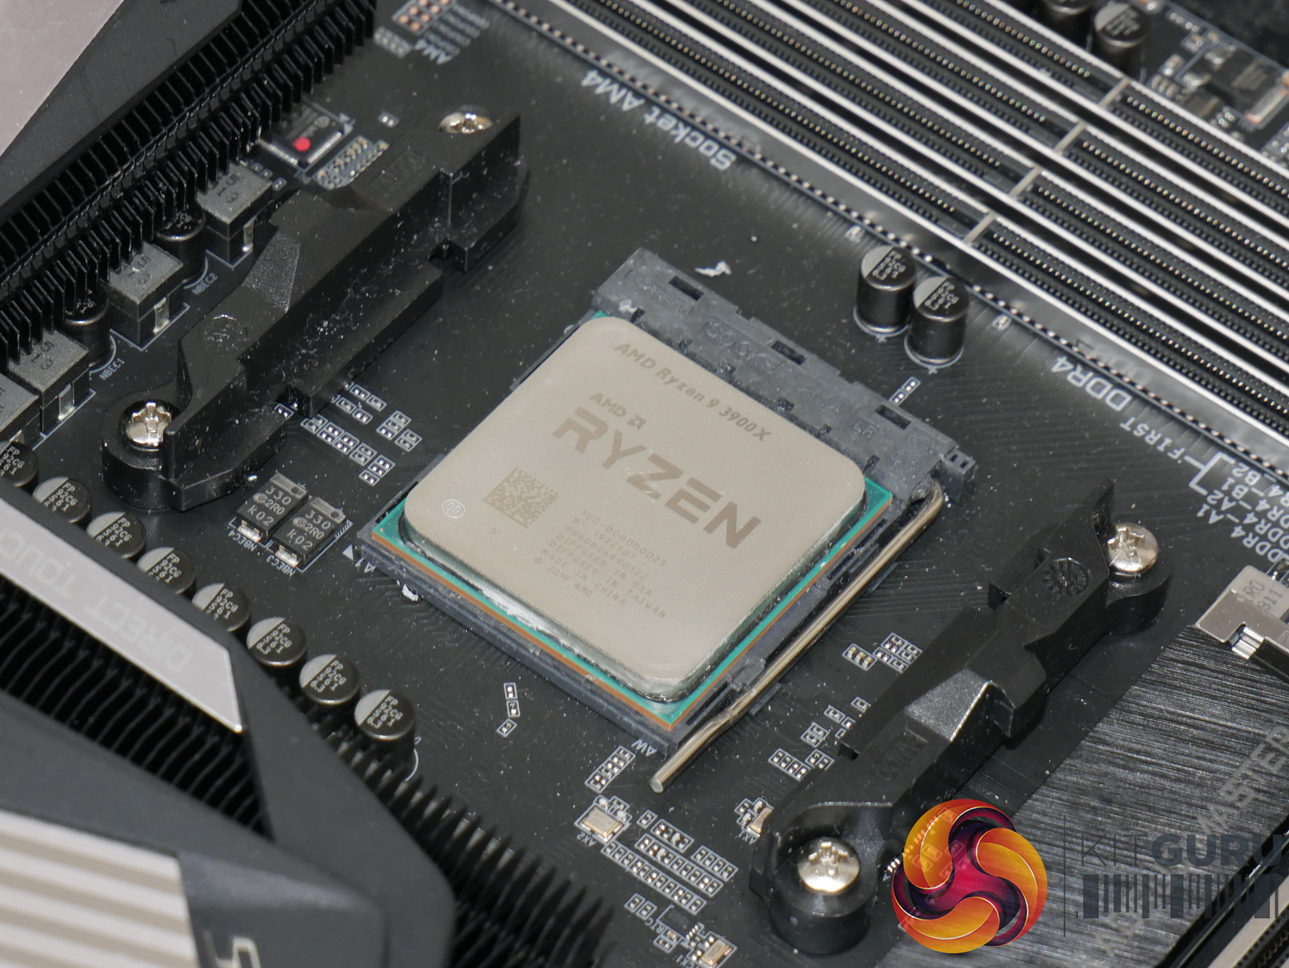 AMD Ryzen 7 3700X Processor Review